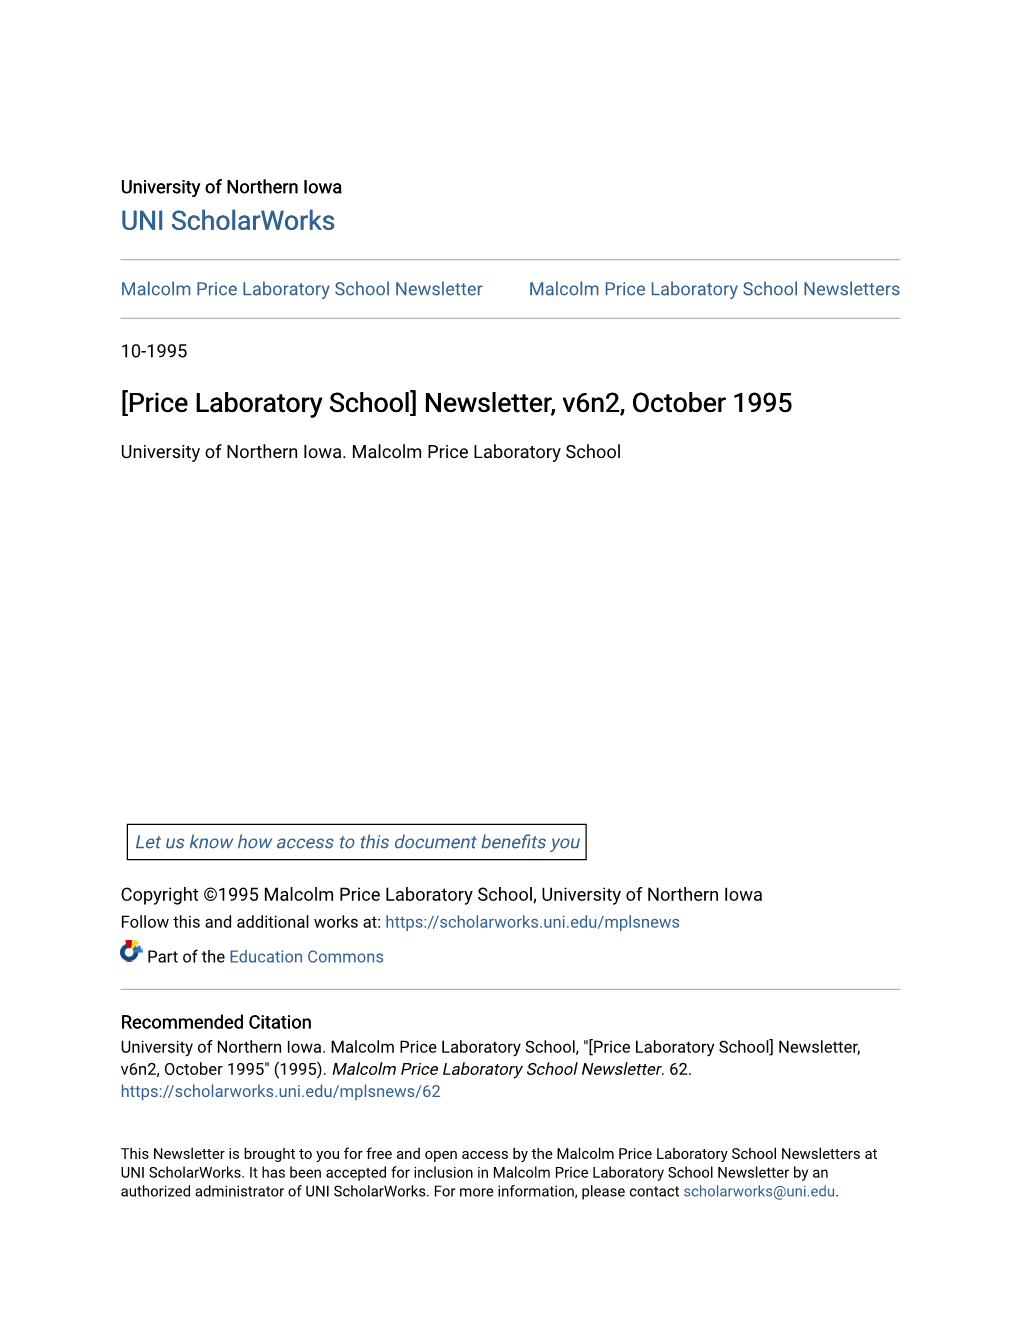 Price Laboratory School Newsletter Malcolm Price Laboratory School Newsletters